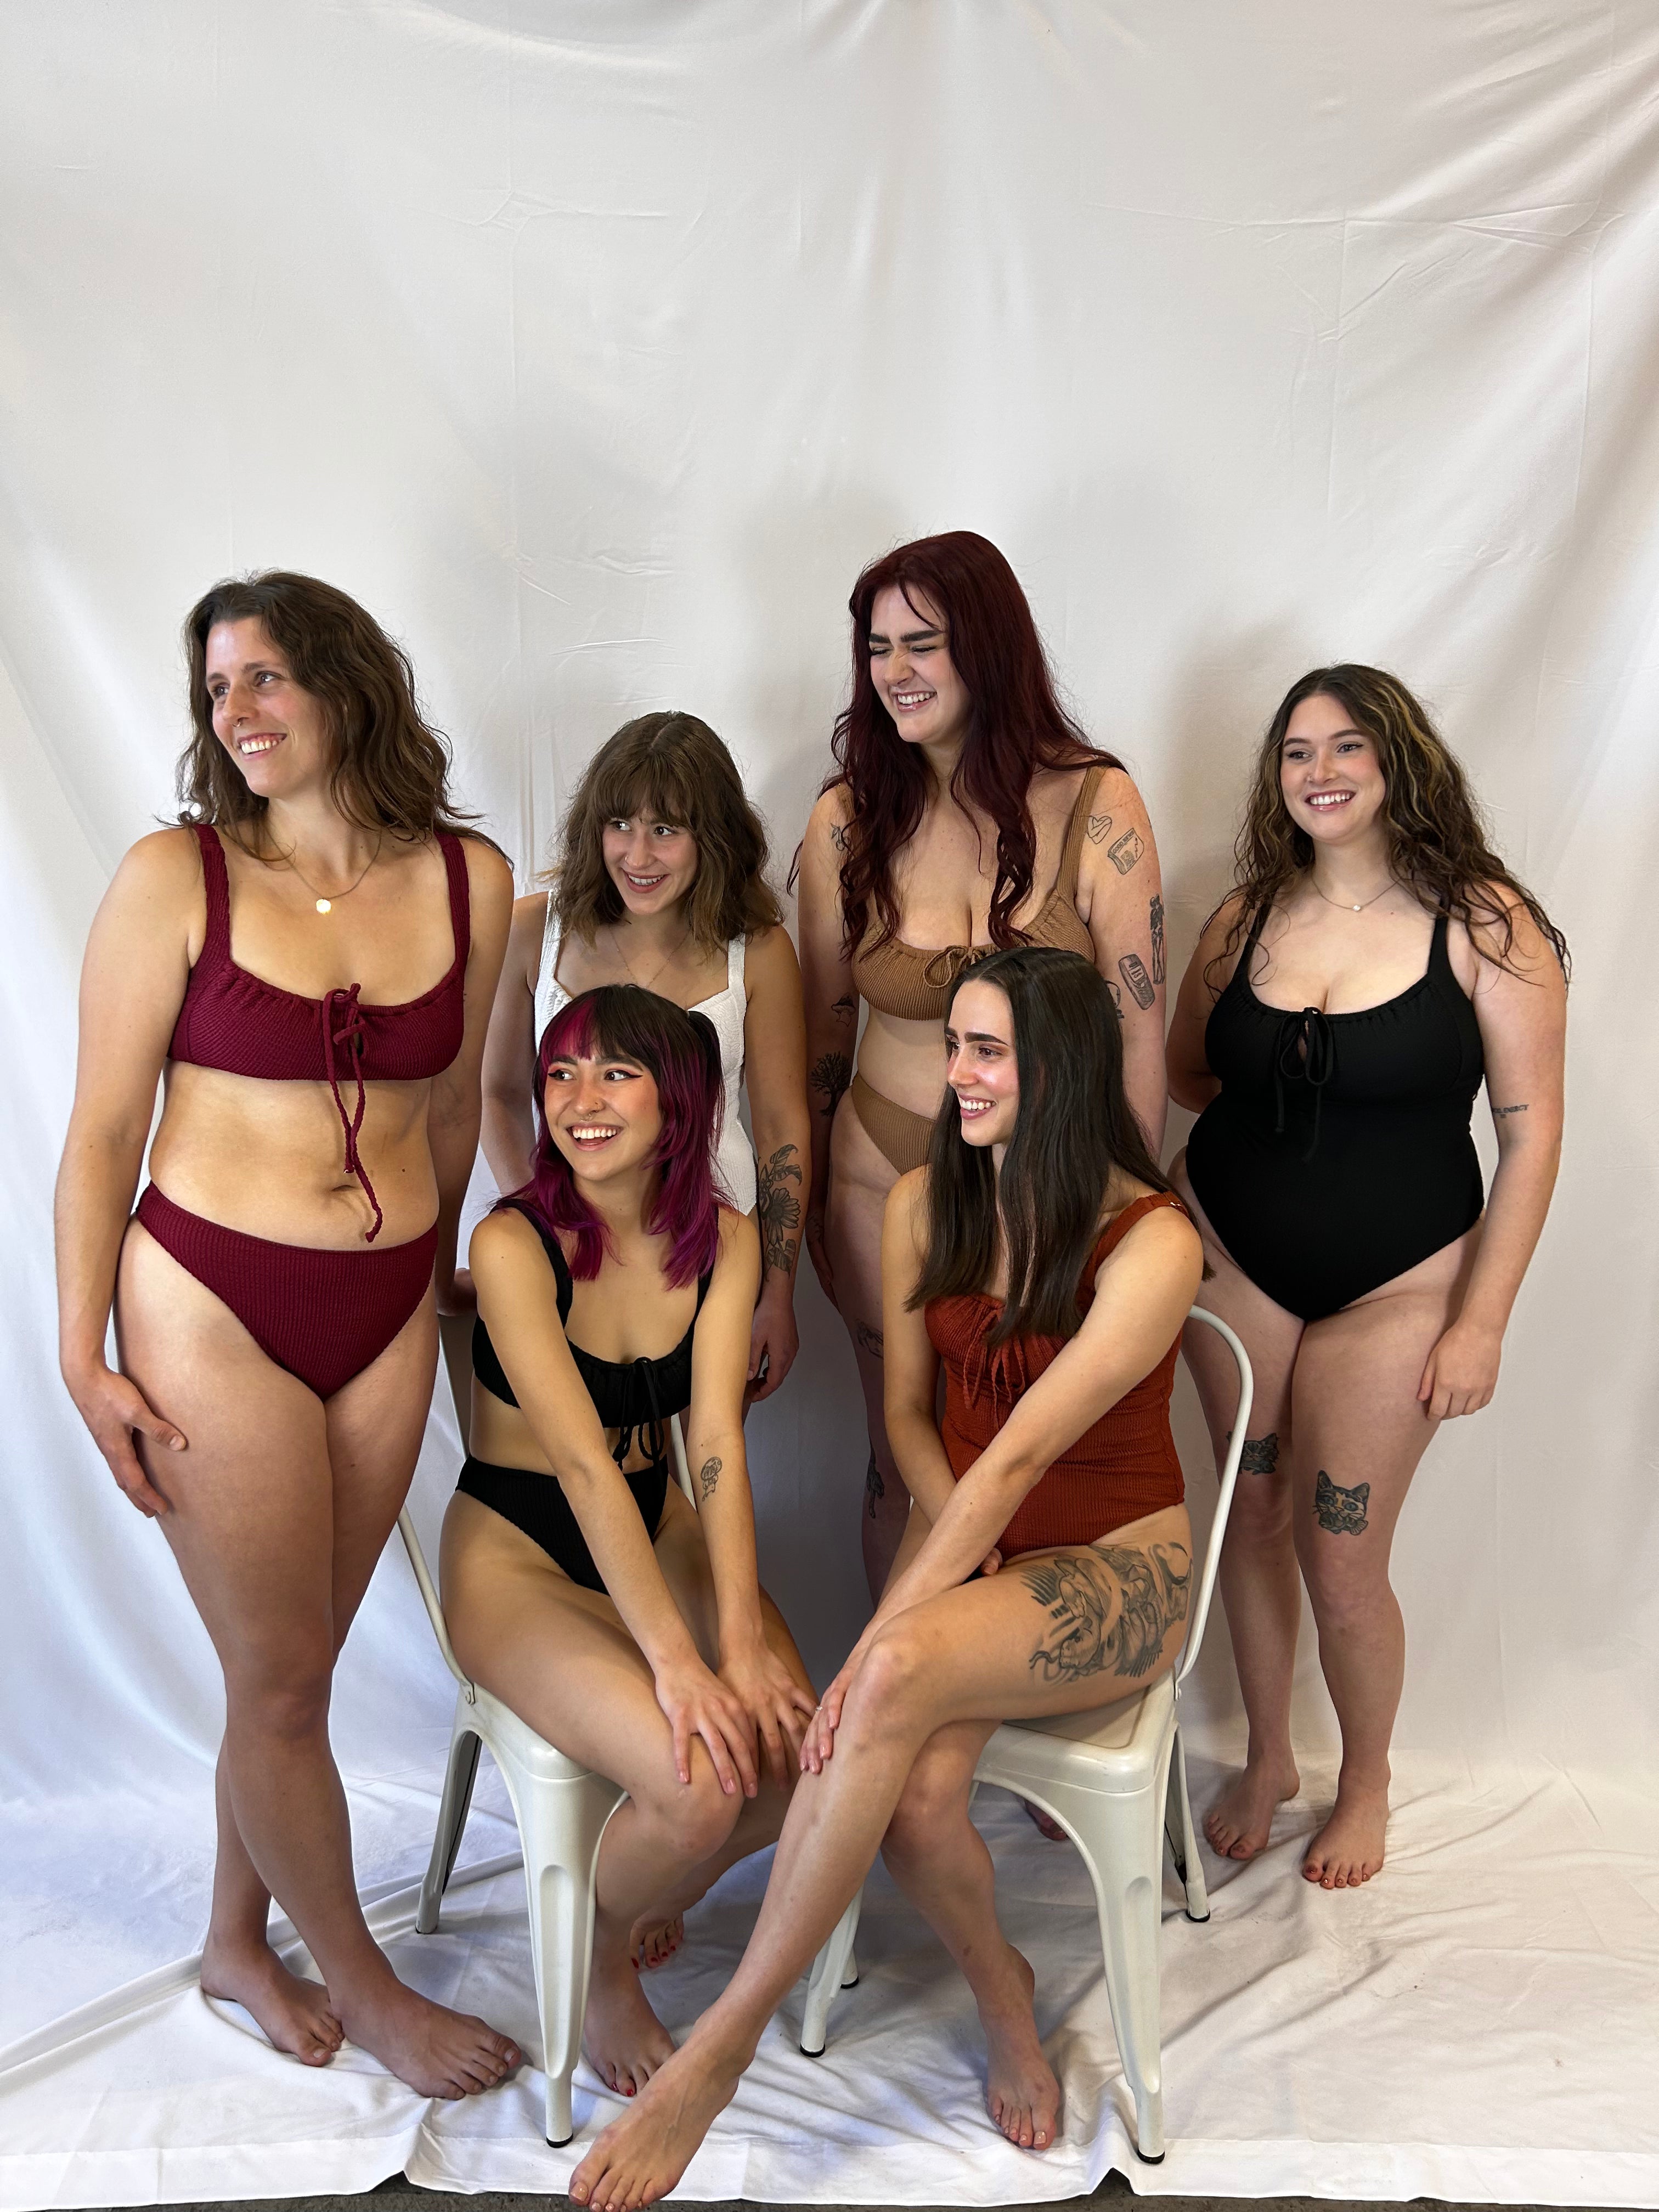 Models wearing (from left to right) the burgundy bikini, black bikini, white one piece, beige bikini, rust one piece, and black one piece swimsuits.